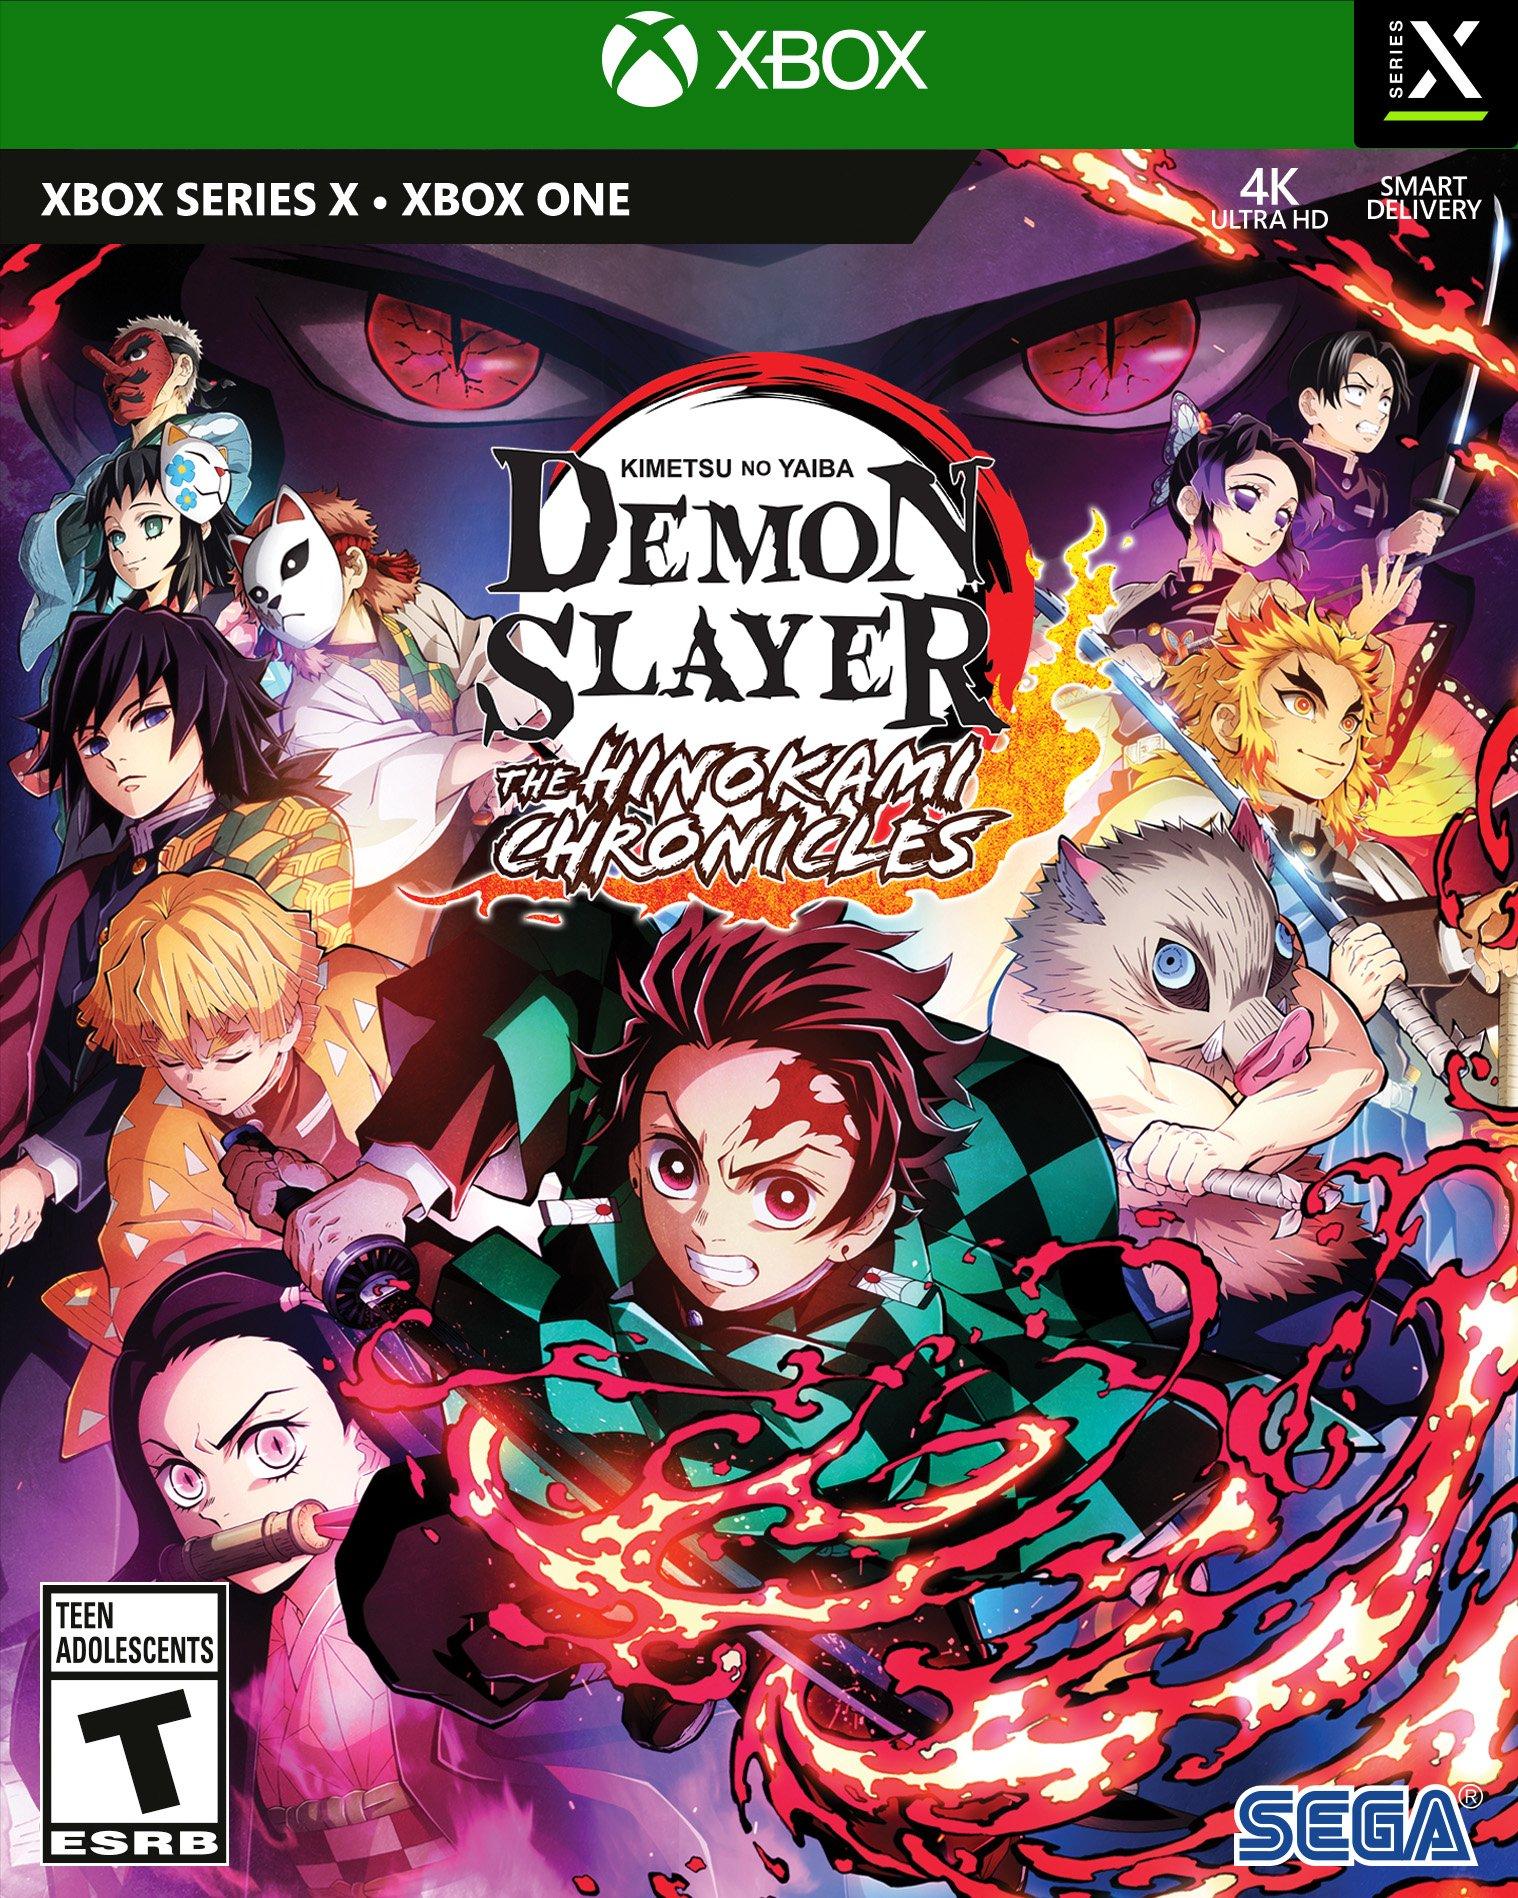 Anime Trending on X: Demon Slayer: Kimetsu no Yaiba will have a